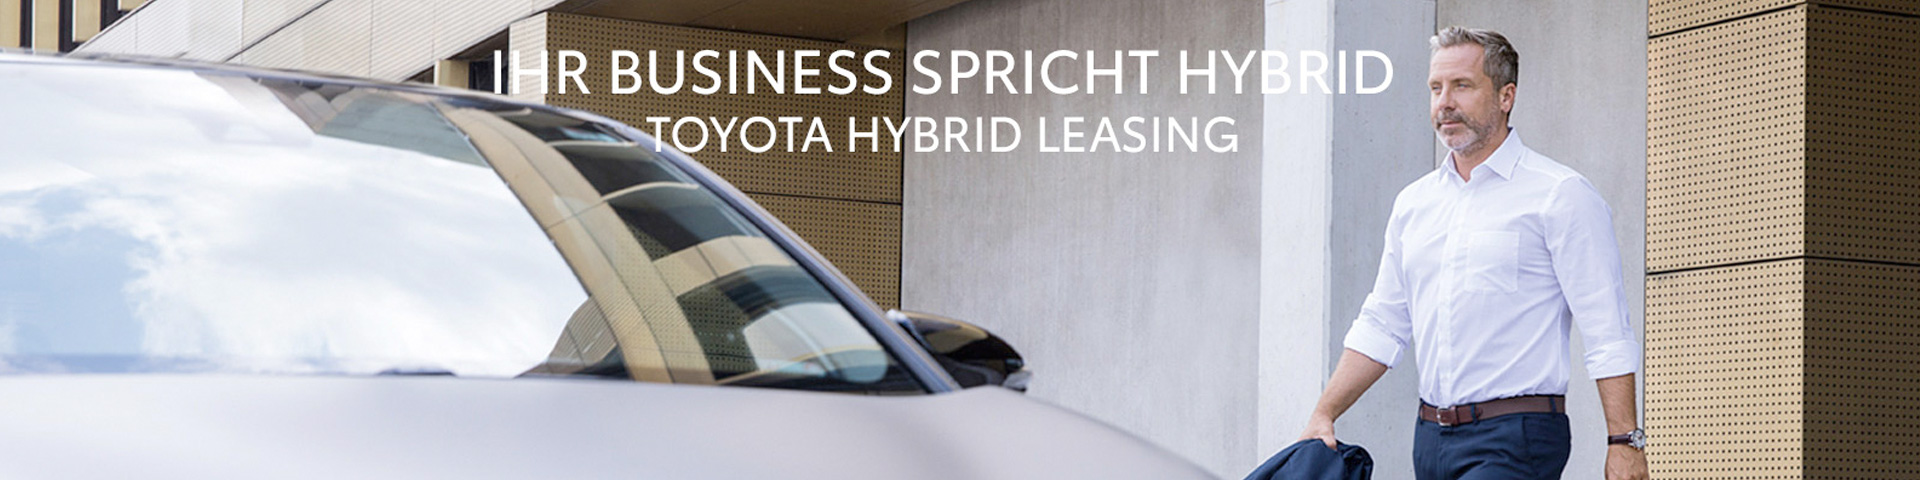 Toyota Hybrid Leasing